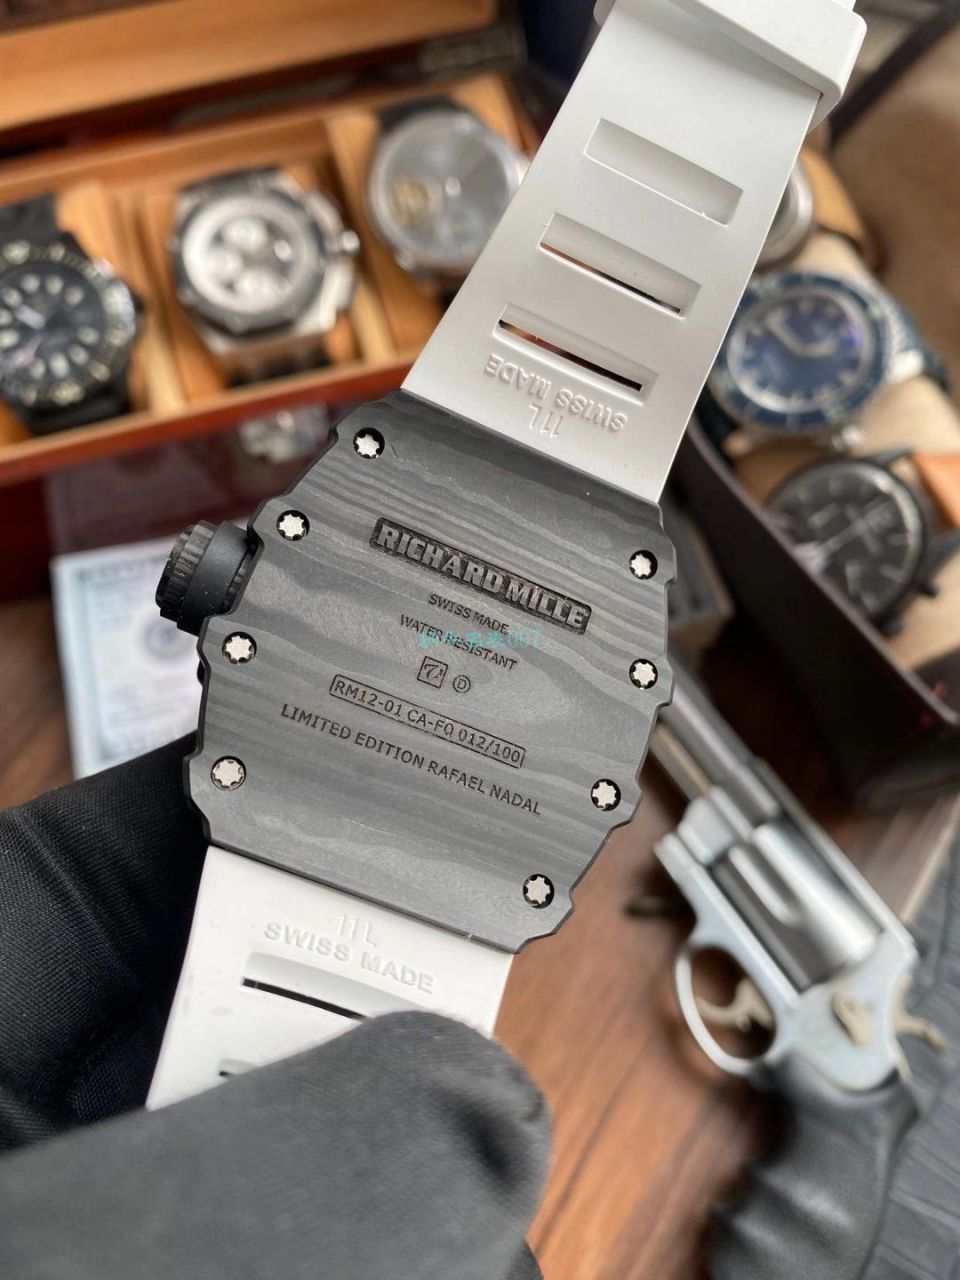 KV厂RICHARD MILLE 理查德米勒RM 12-01 限量陀飞轮一比一顶级复刻手表 